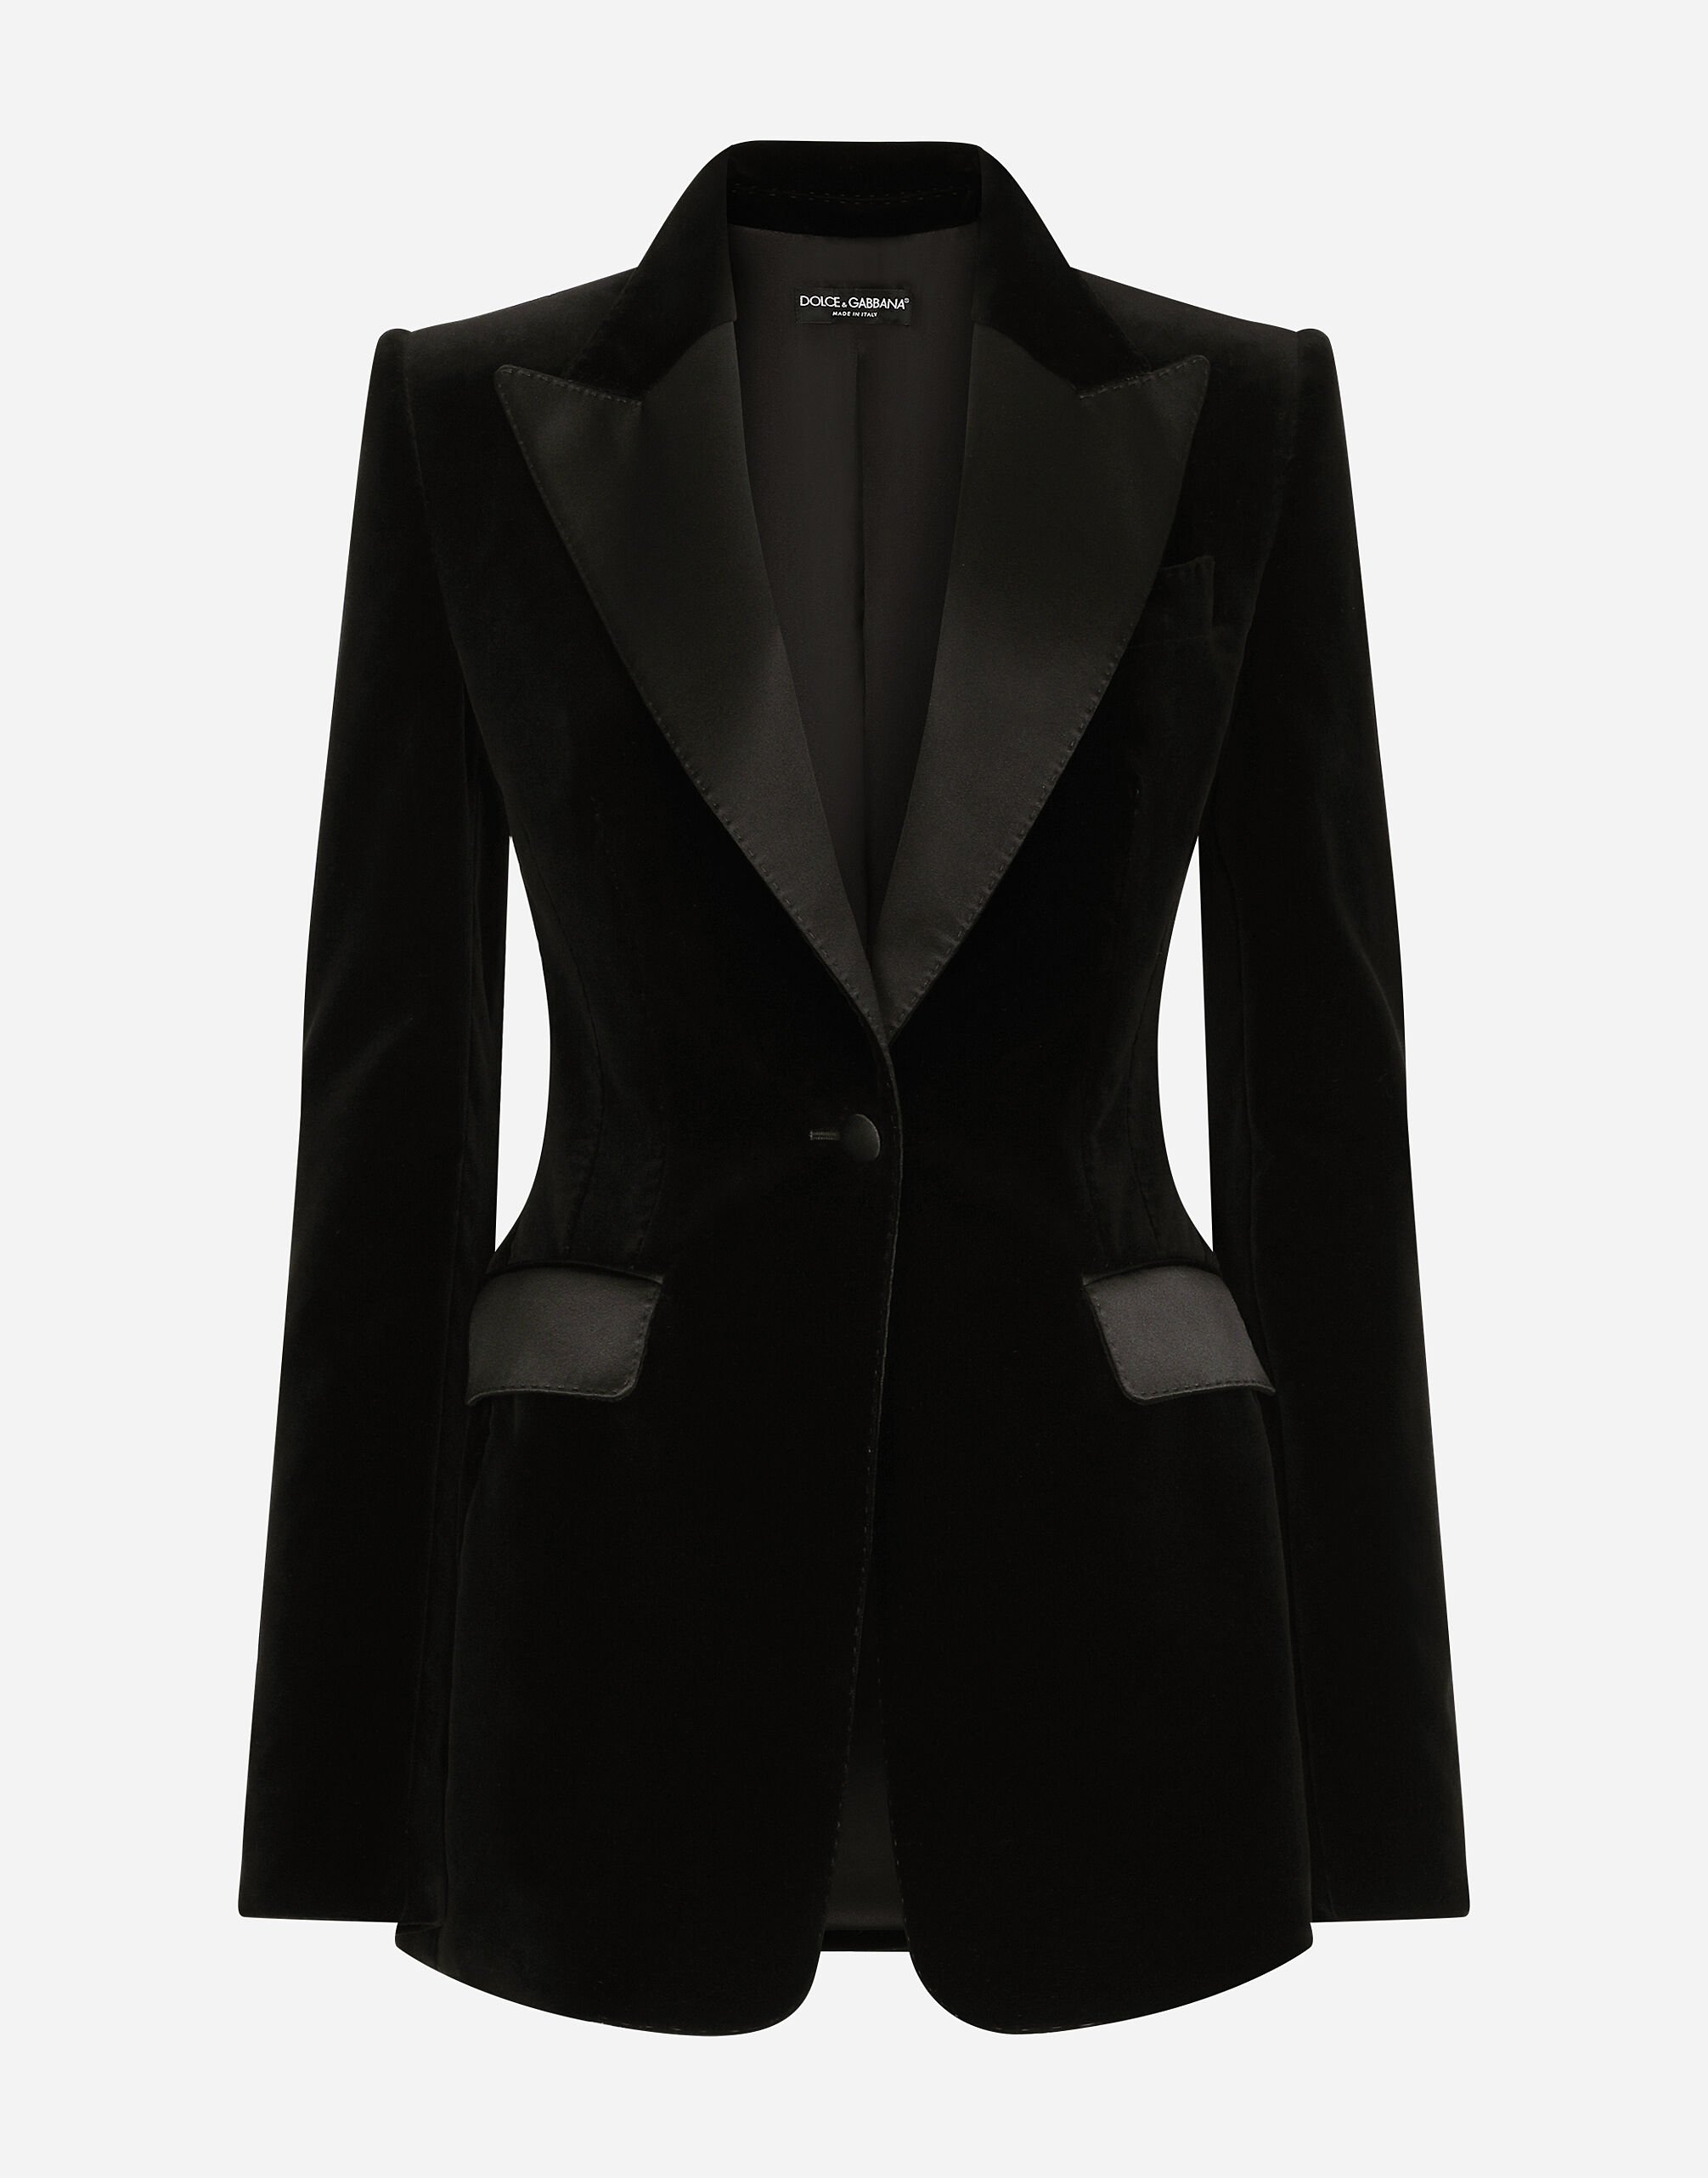 Dolce & Gabbana Velvet single-breasted Turlington tuxedo jacket Black F26T2TFUGPO